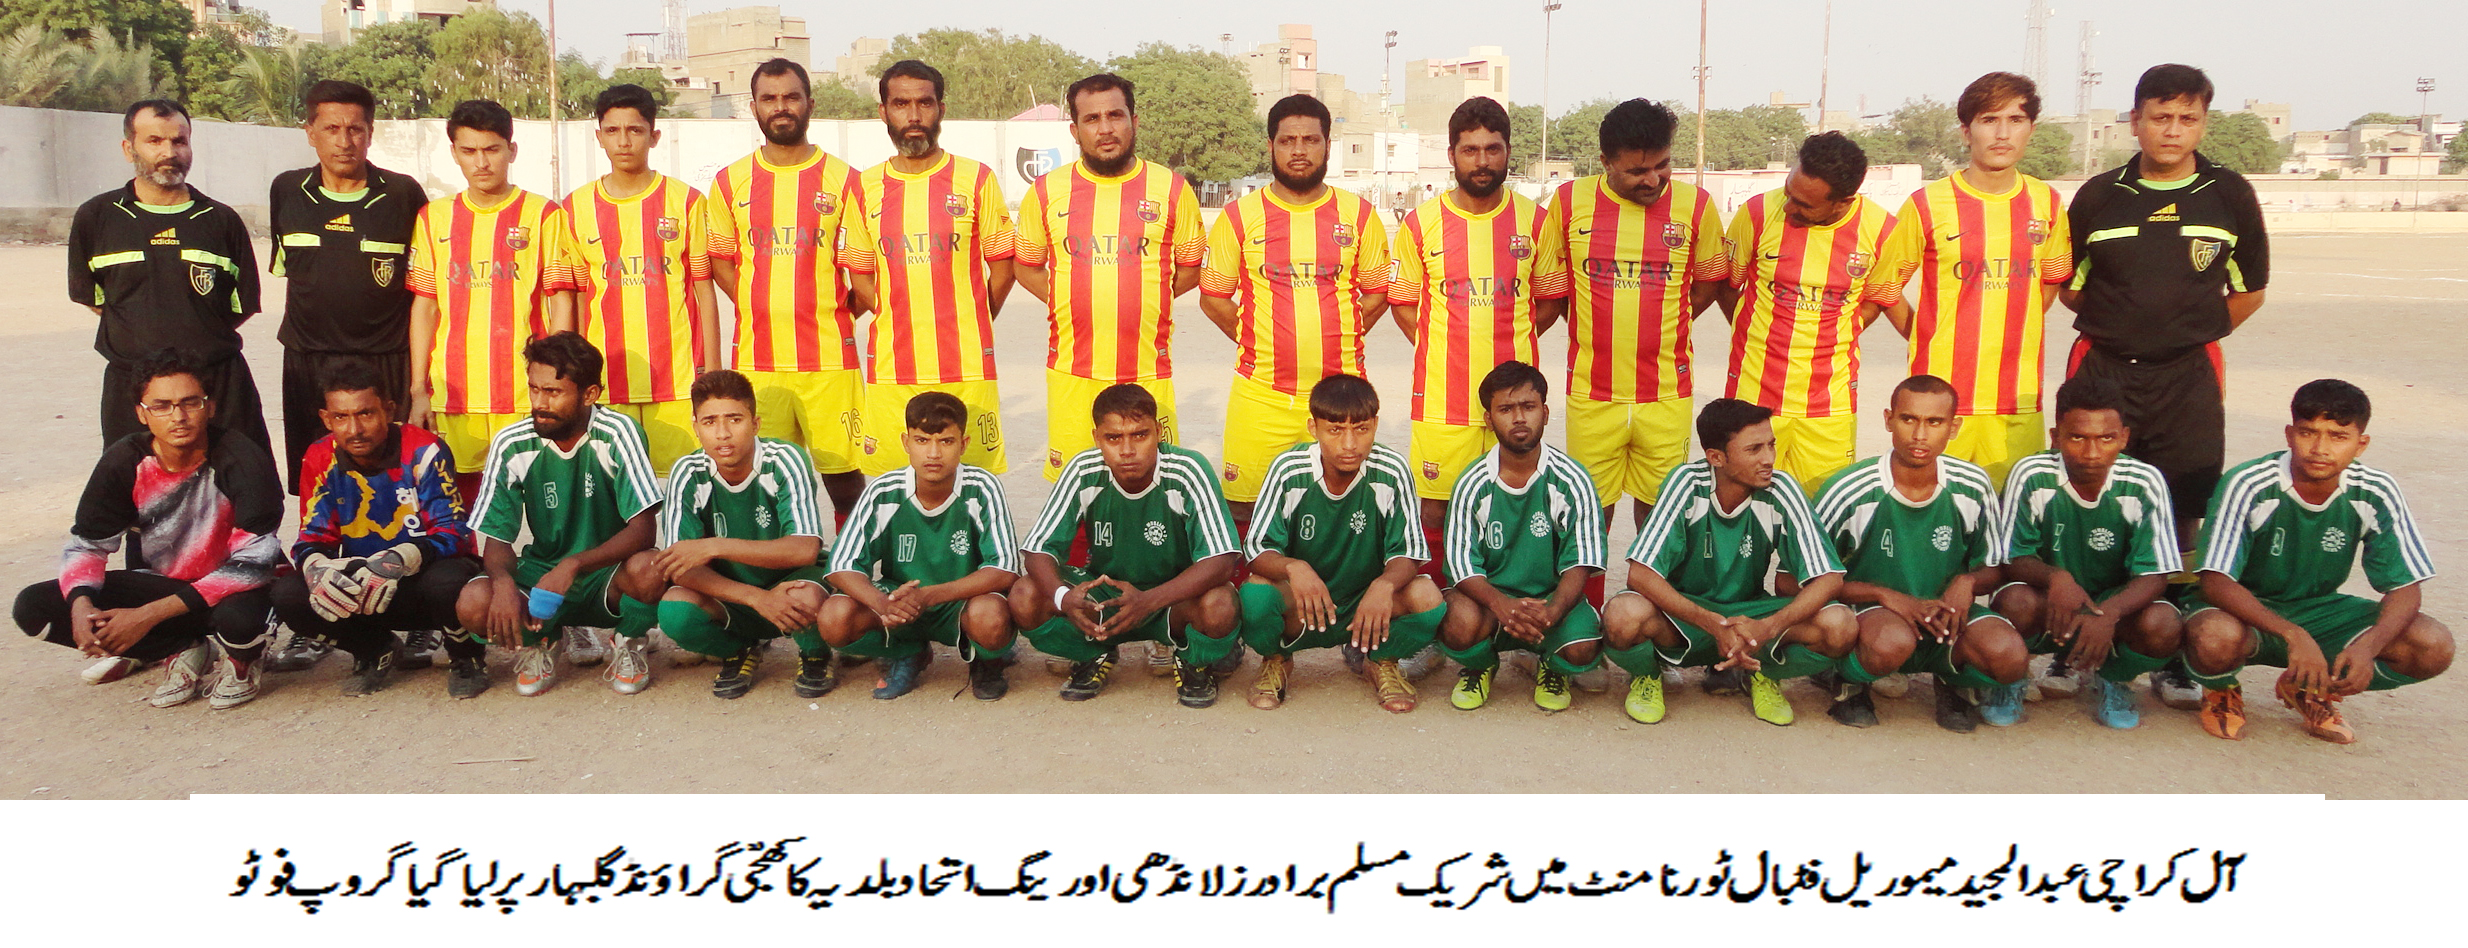 All-Karachi Abdul Majeed Football Tournament: Shama Sports Baldia, Eidgah Youth South and Karachi Friends grab wins